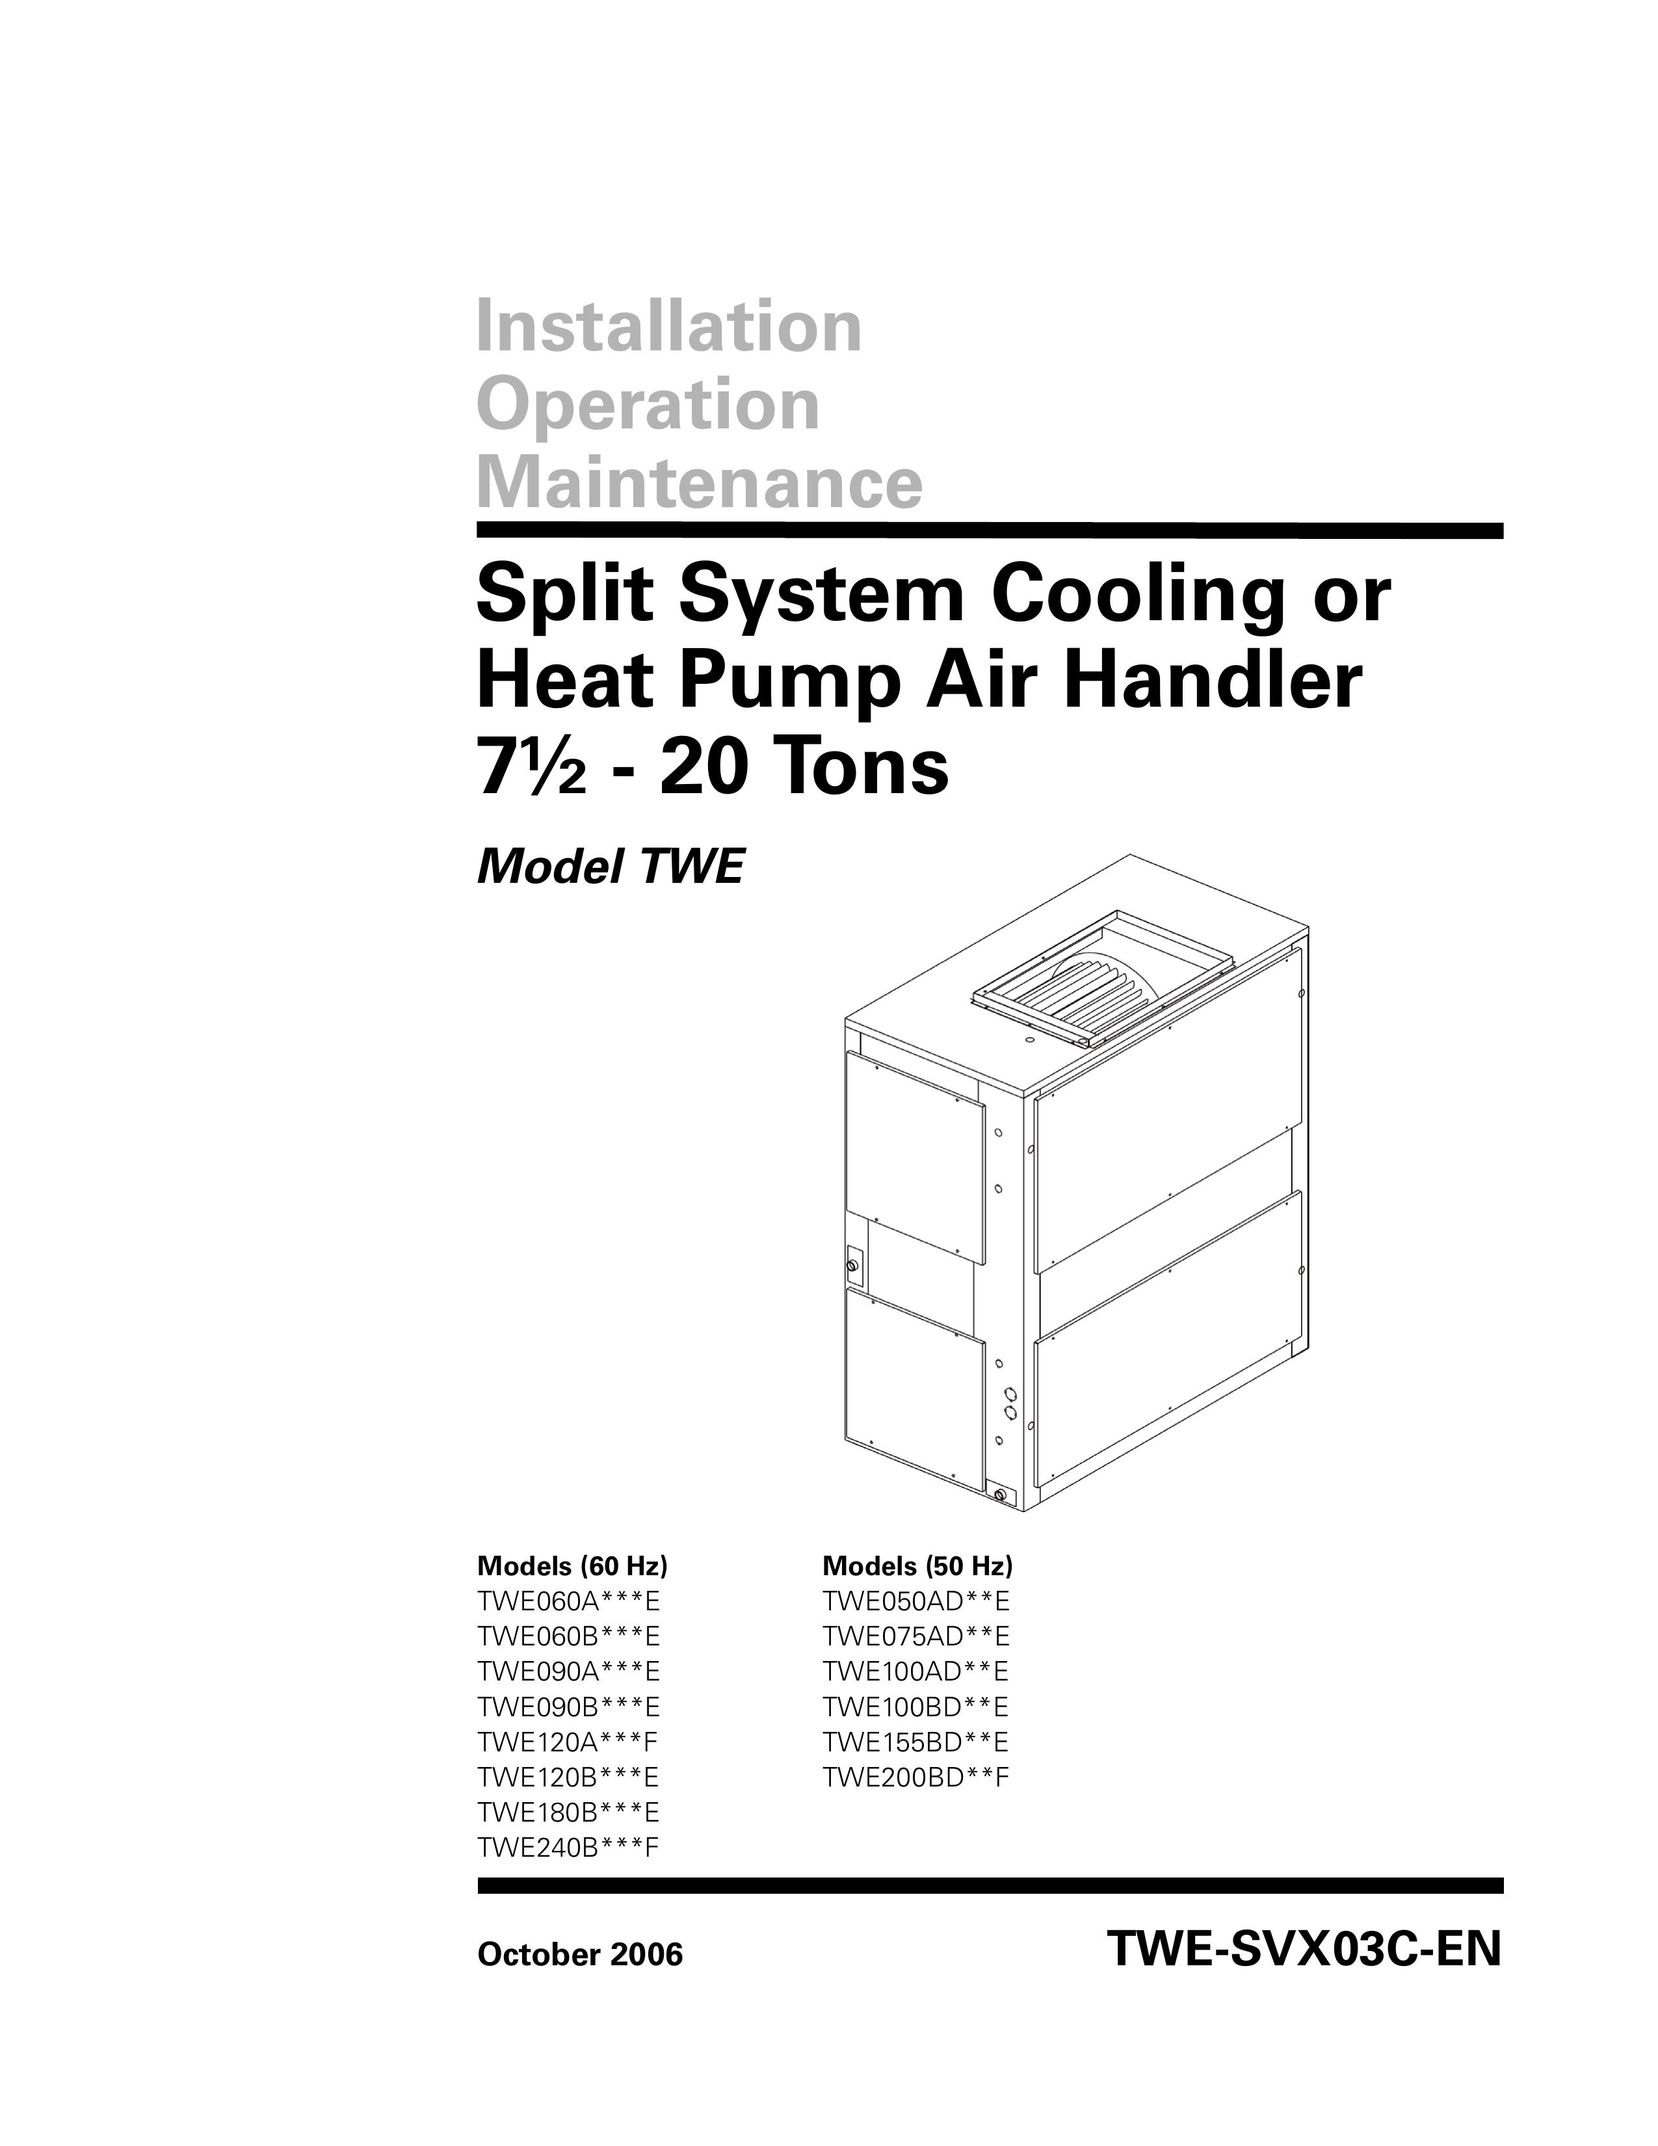 American Standard TWE120A***F Heat Pump User Manual